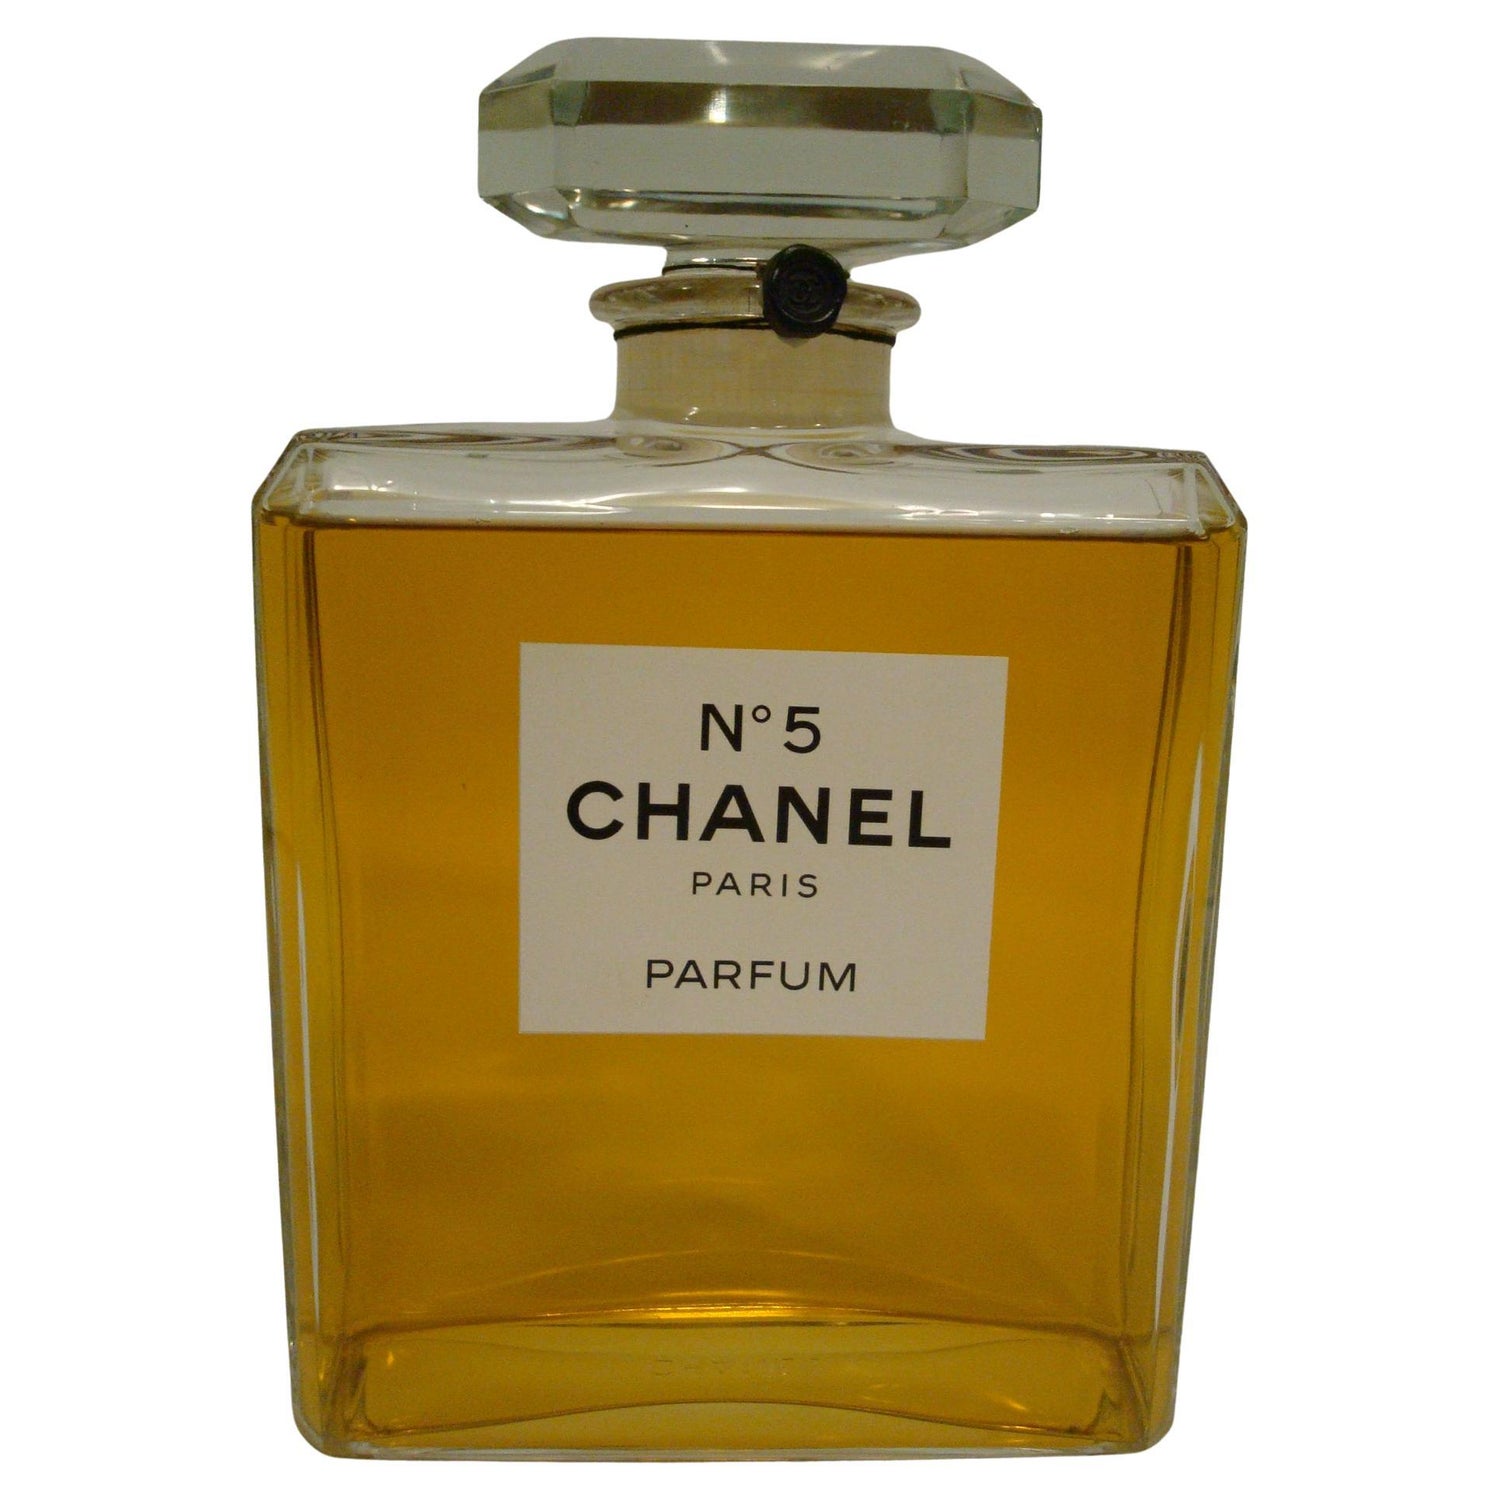 Chanel 5 Water Bottle - 2 For Sale on 1stDibs